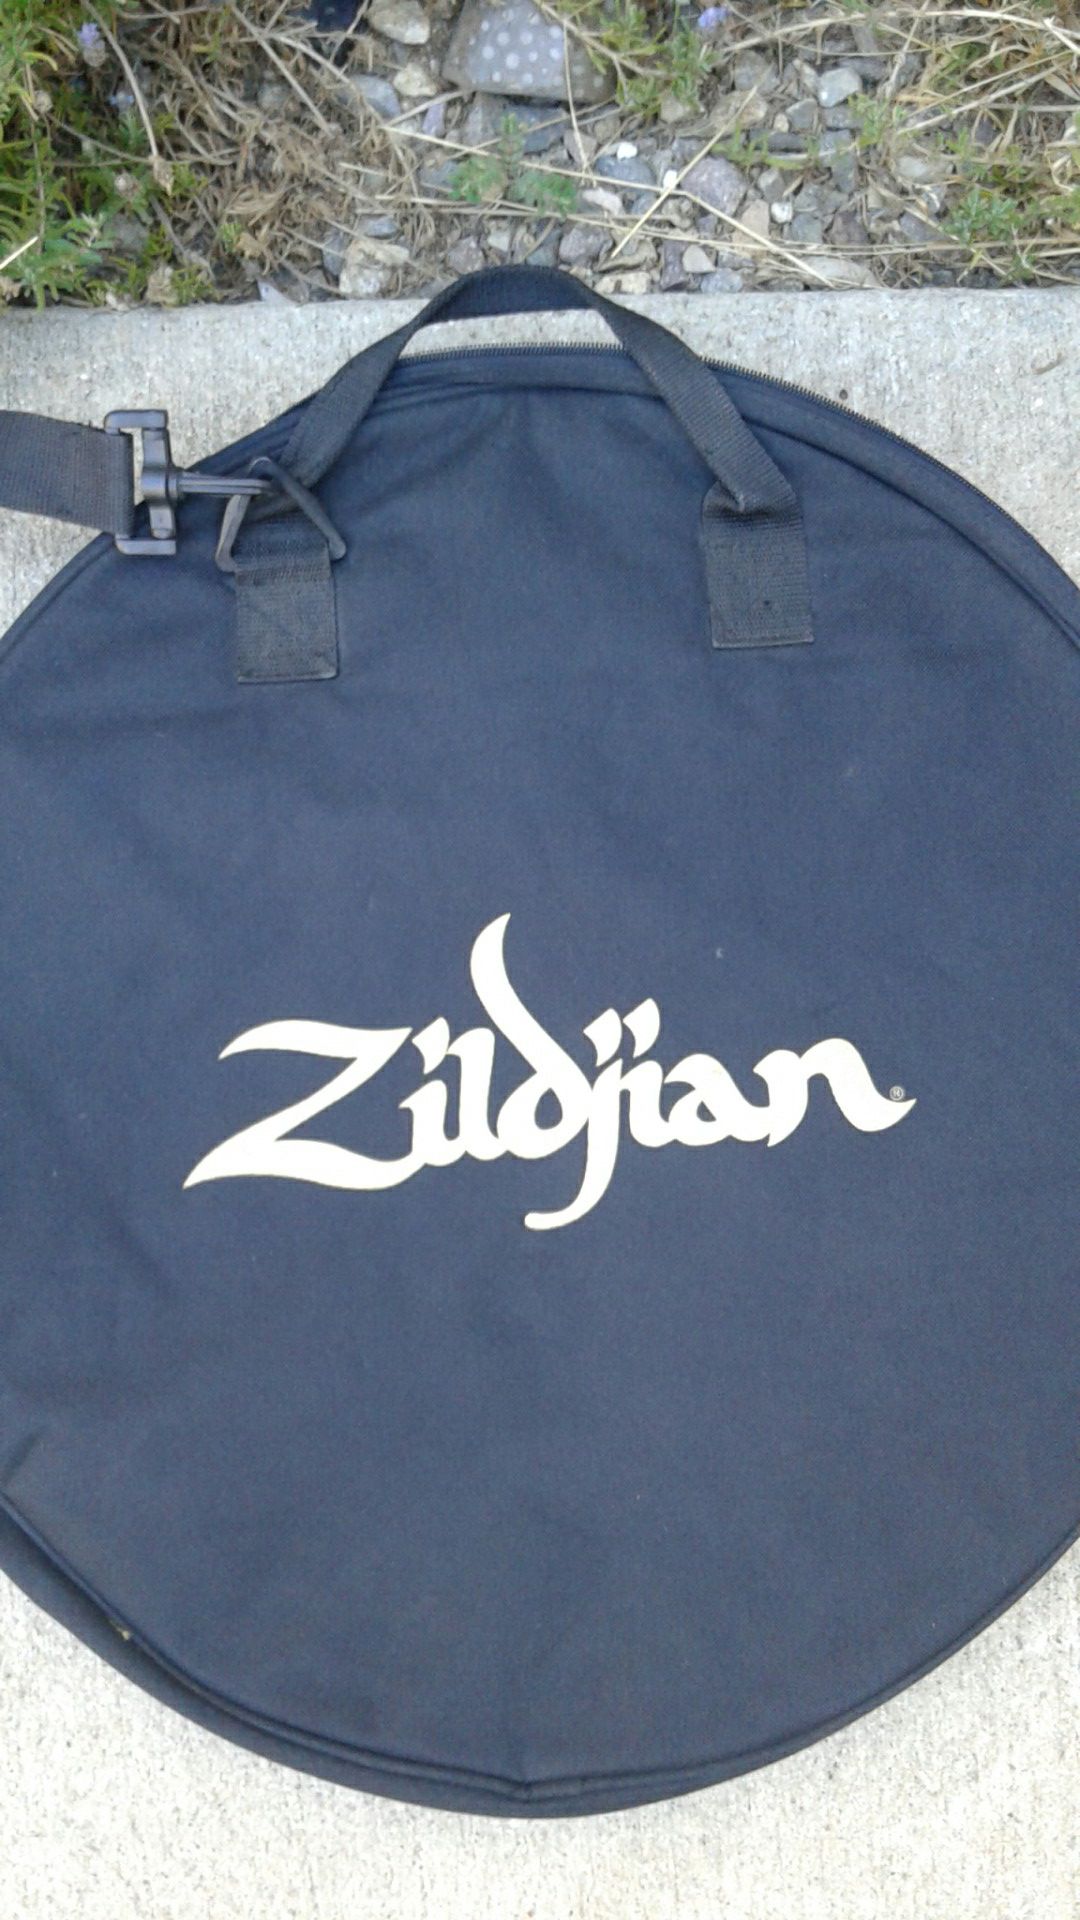 Available now Zildjian like new Cymbal Bag